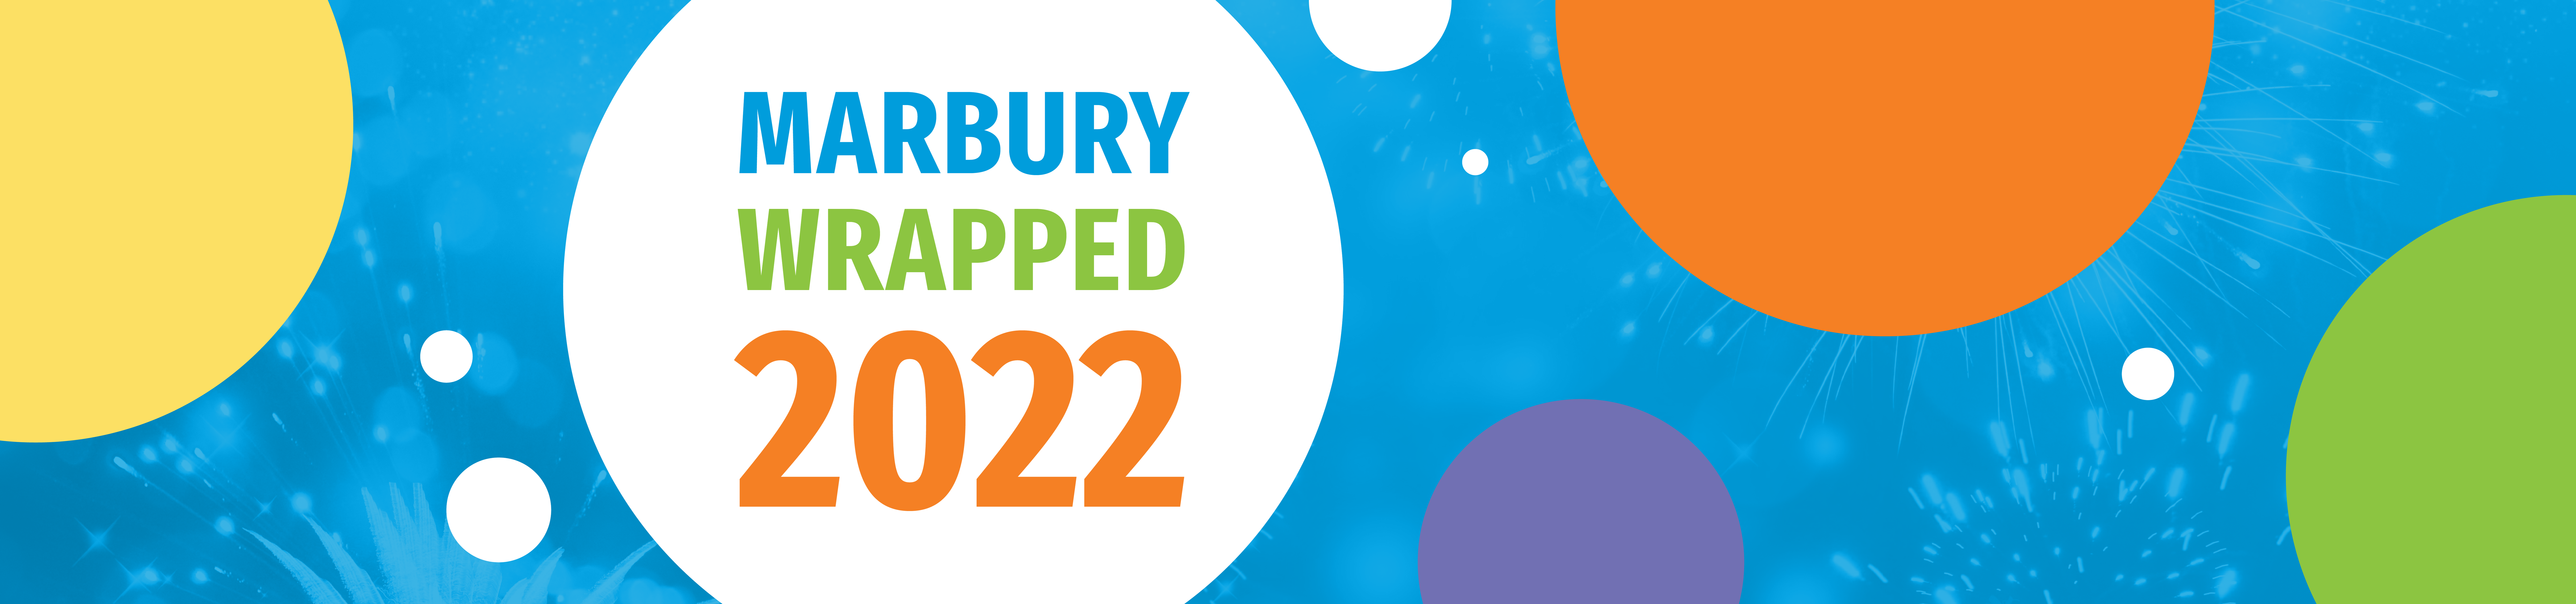 Marbury Wrapped 2022